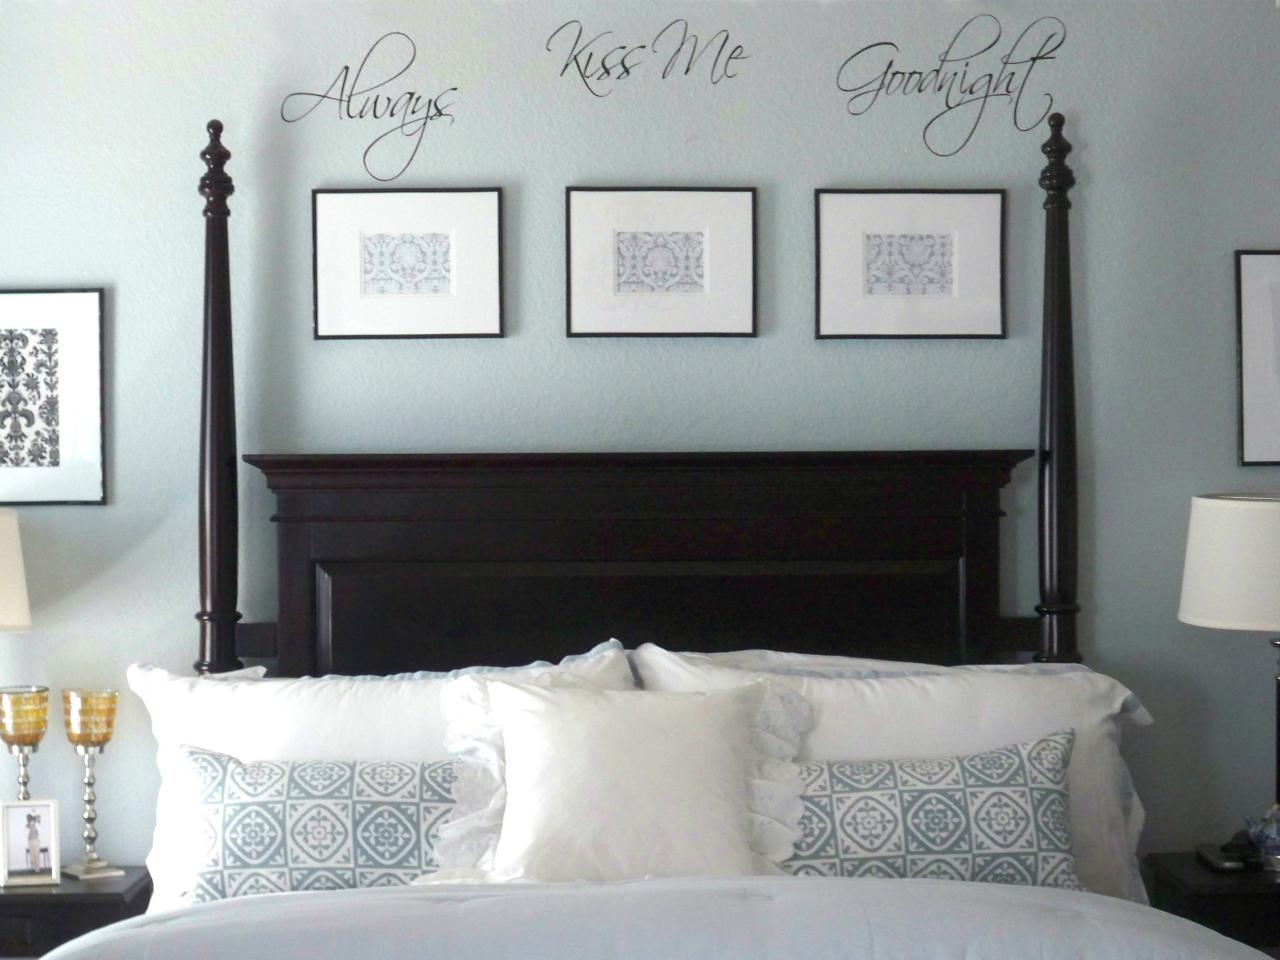 RMS ebonie-tranquil-bedroom-vinyl-phrase-over-bed s4x3.jpg.rend.hgtvcom.1280.960